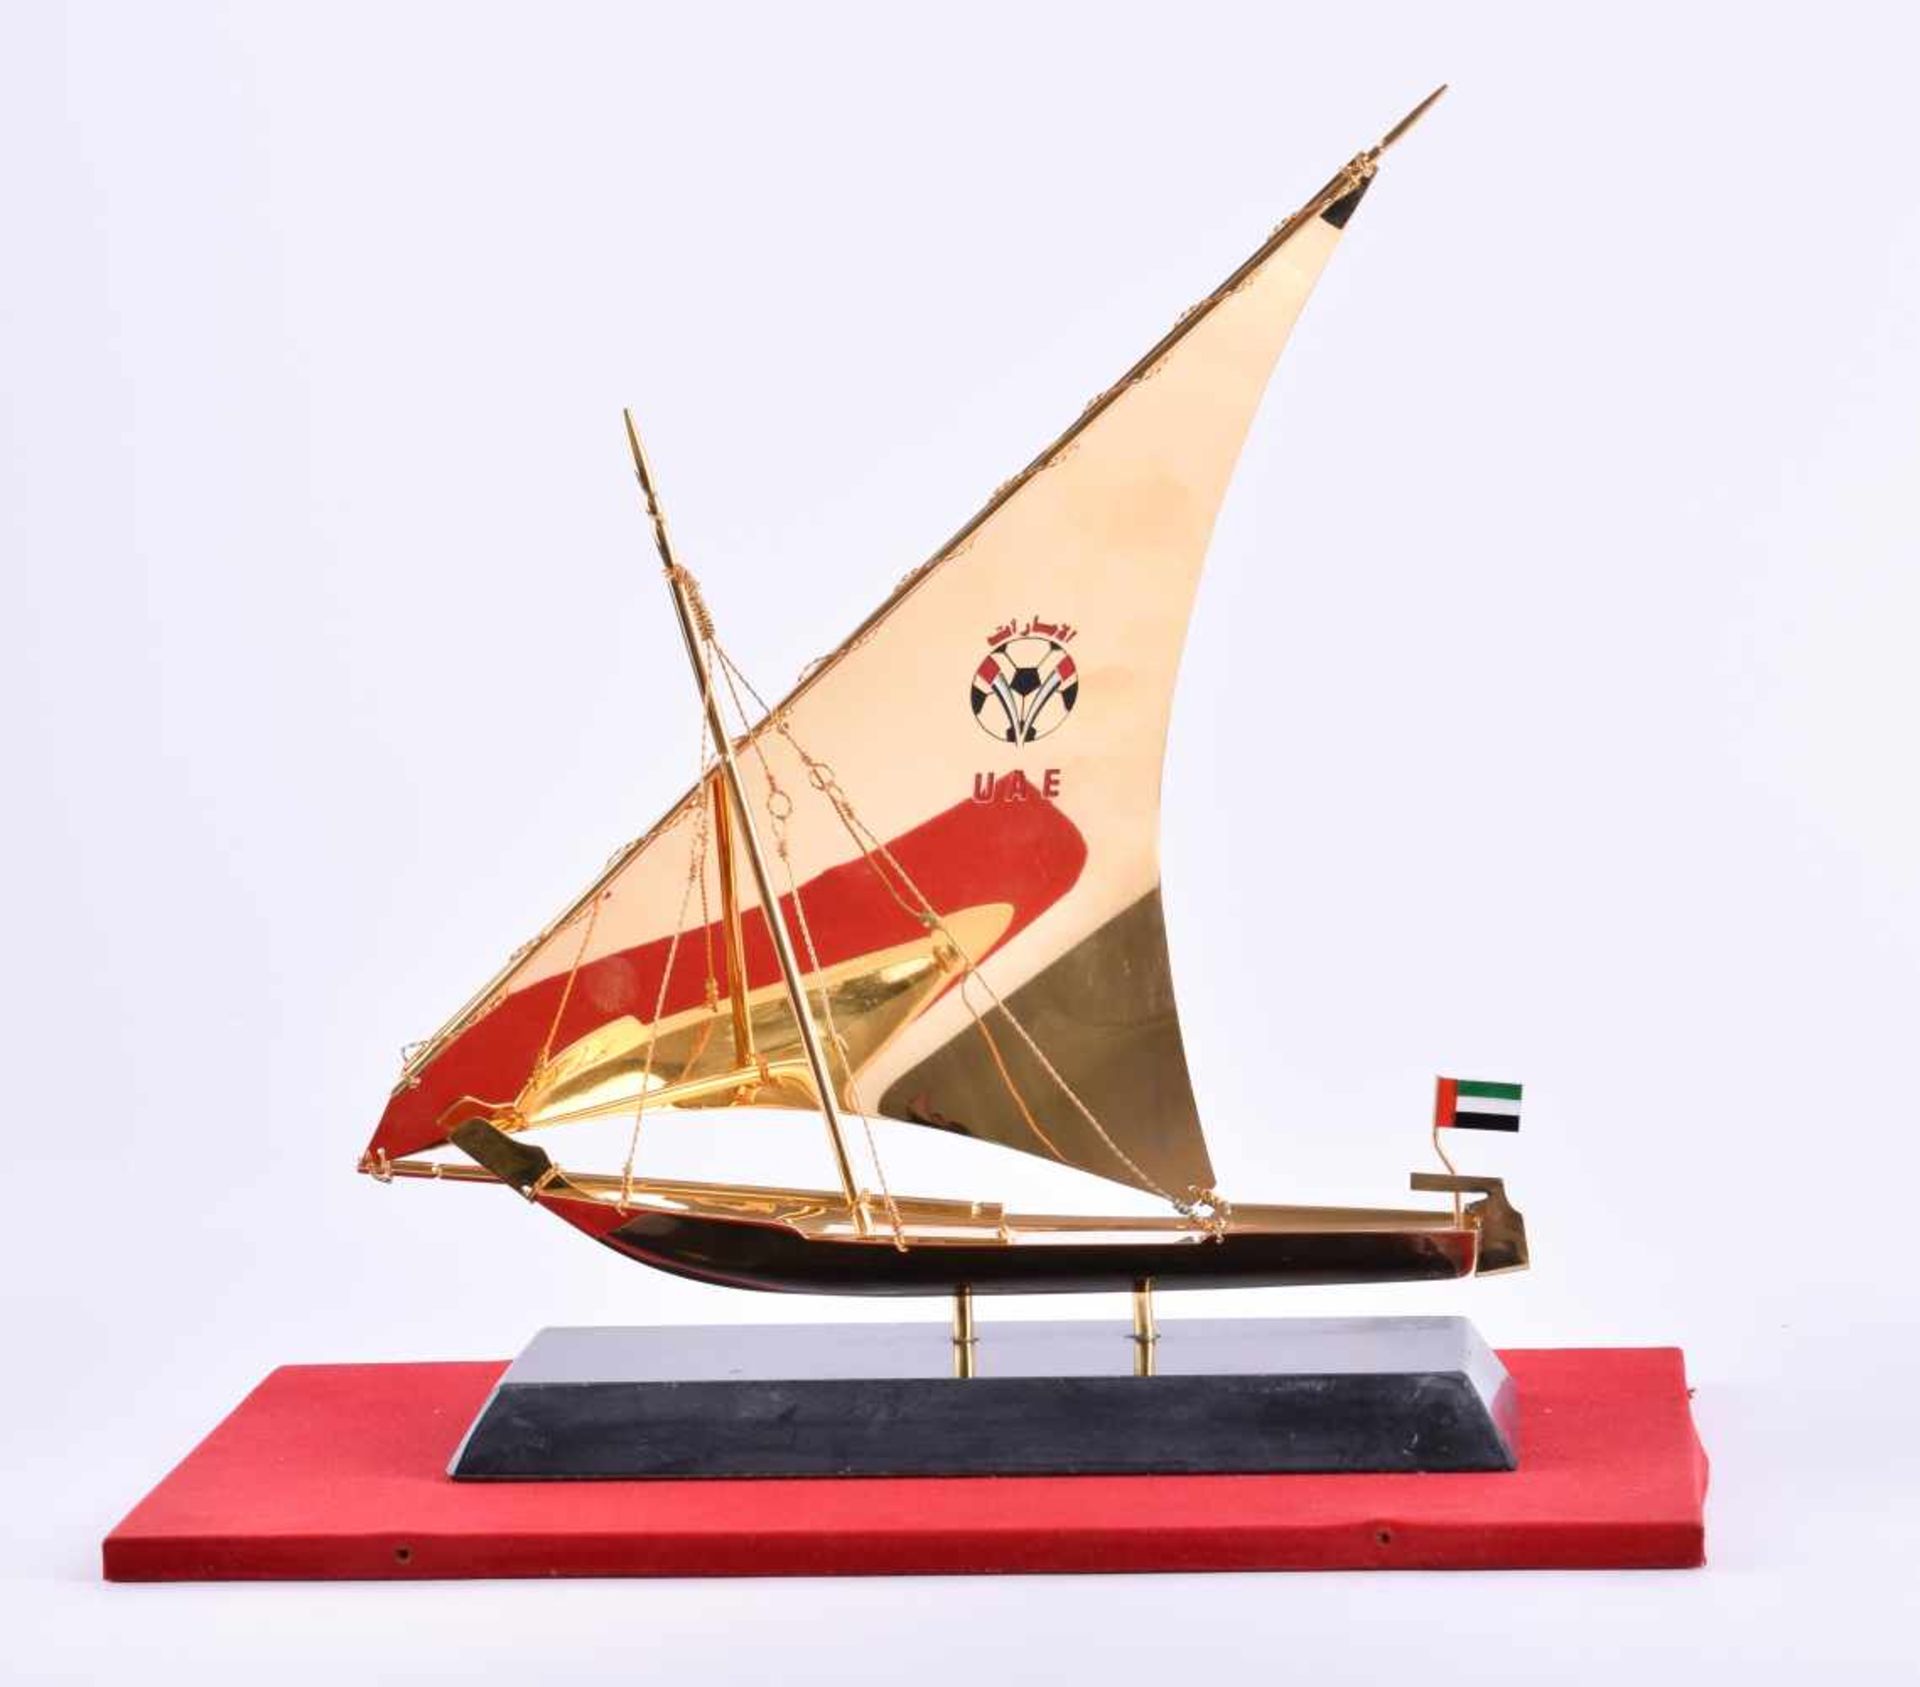 Abu Dhabi, Racing Boot - DauSchiffmodell aus Messing mit schwerer Vergoldung, montiert auf